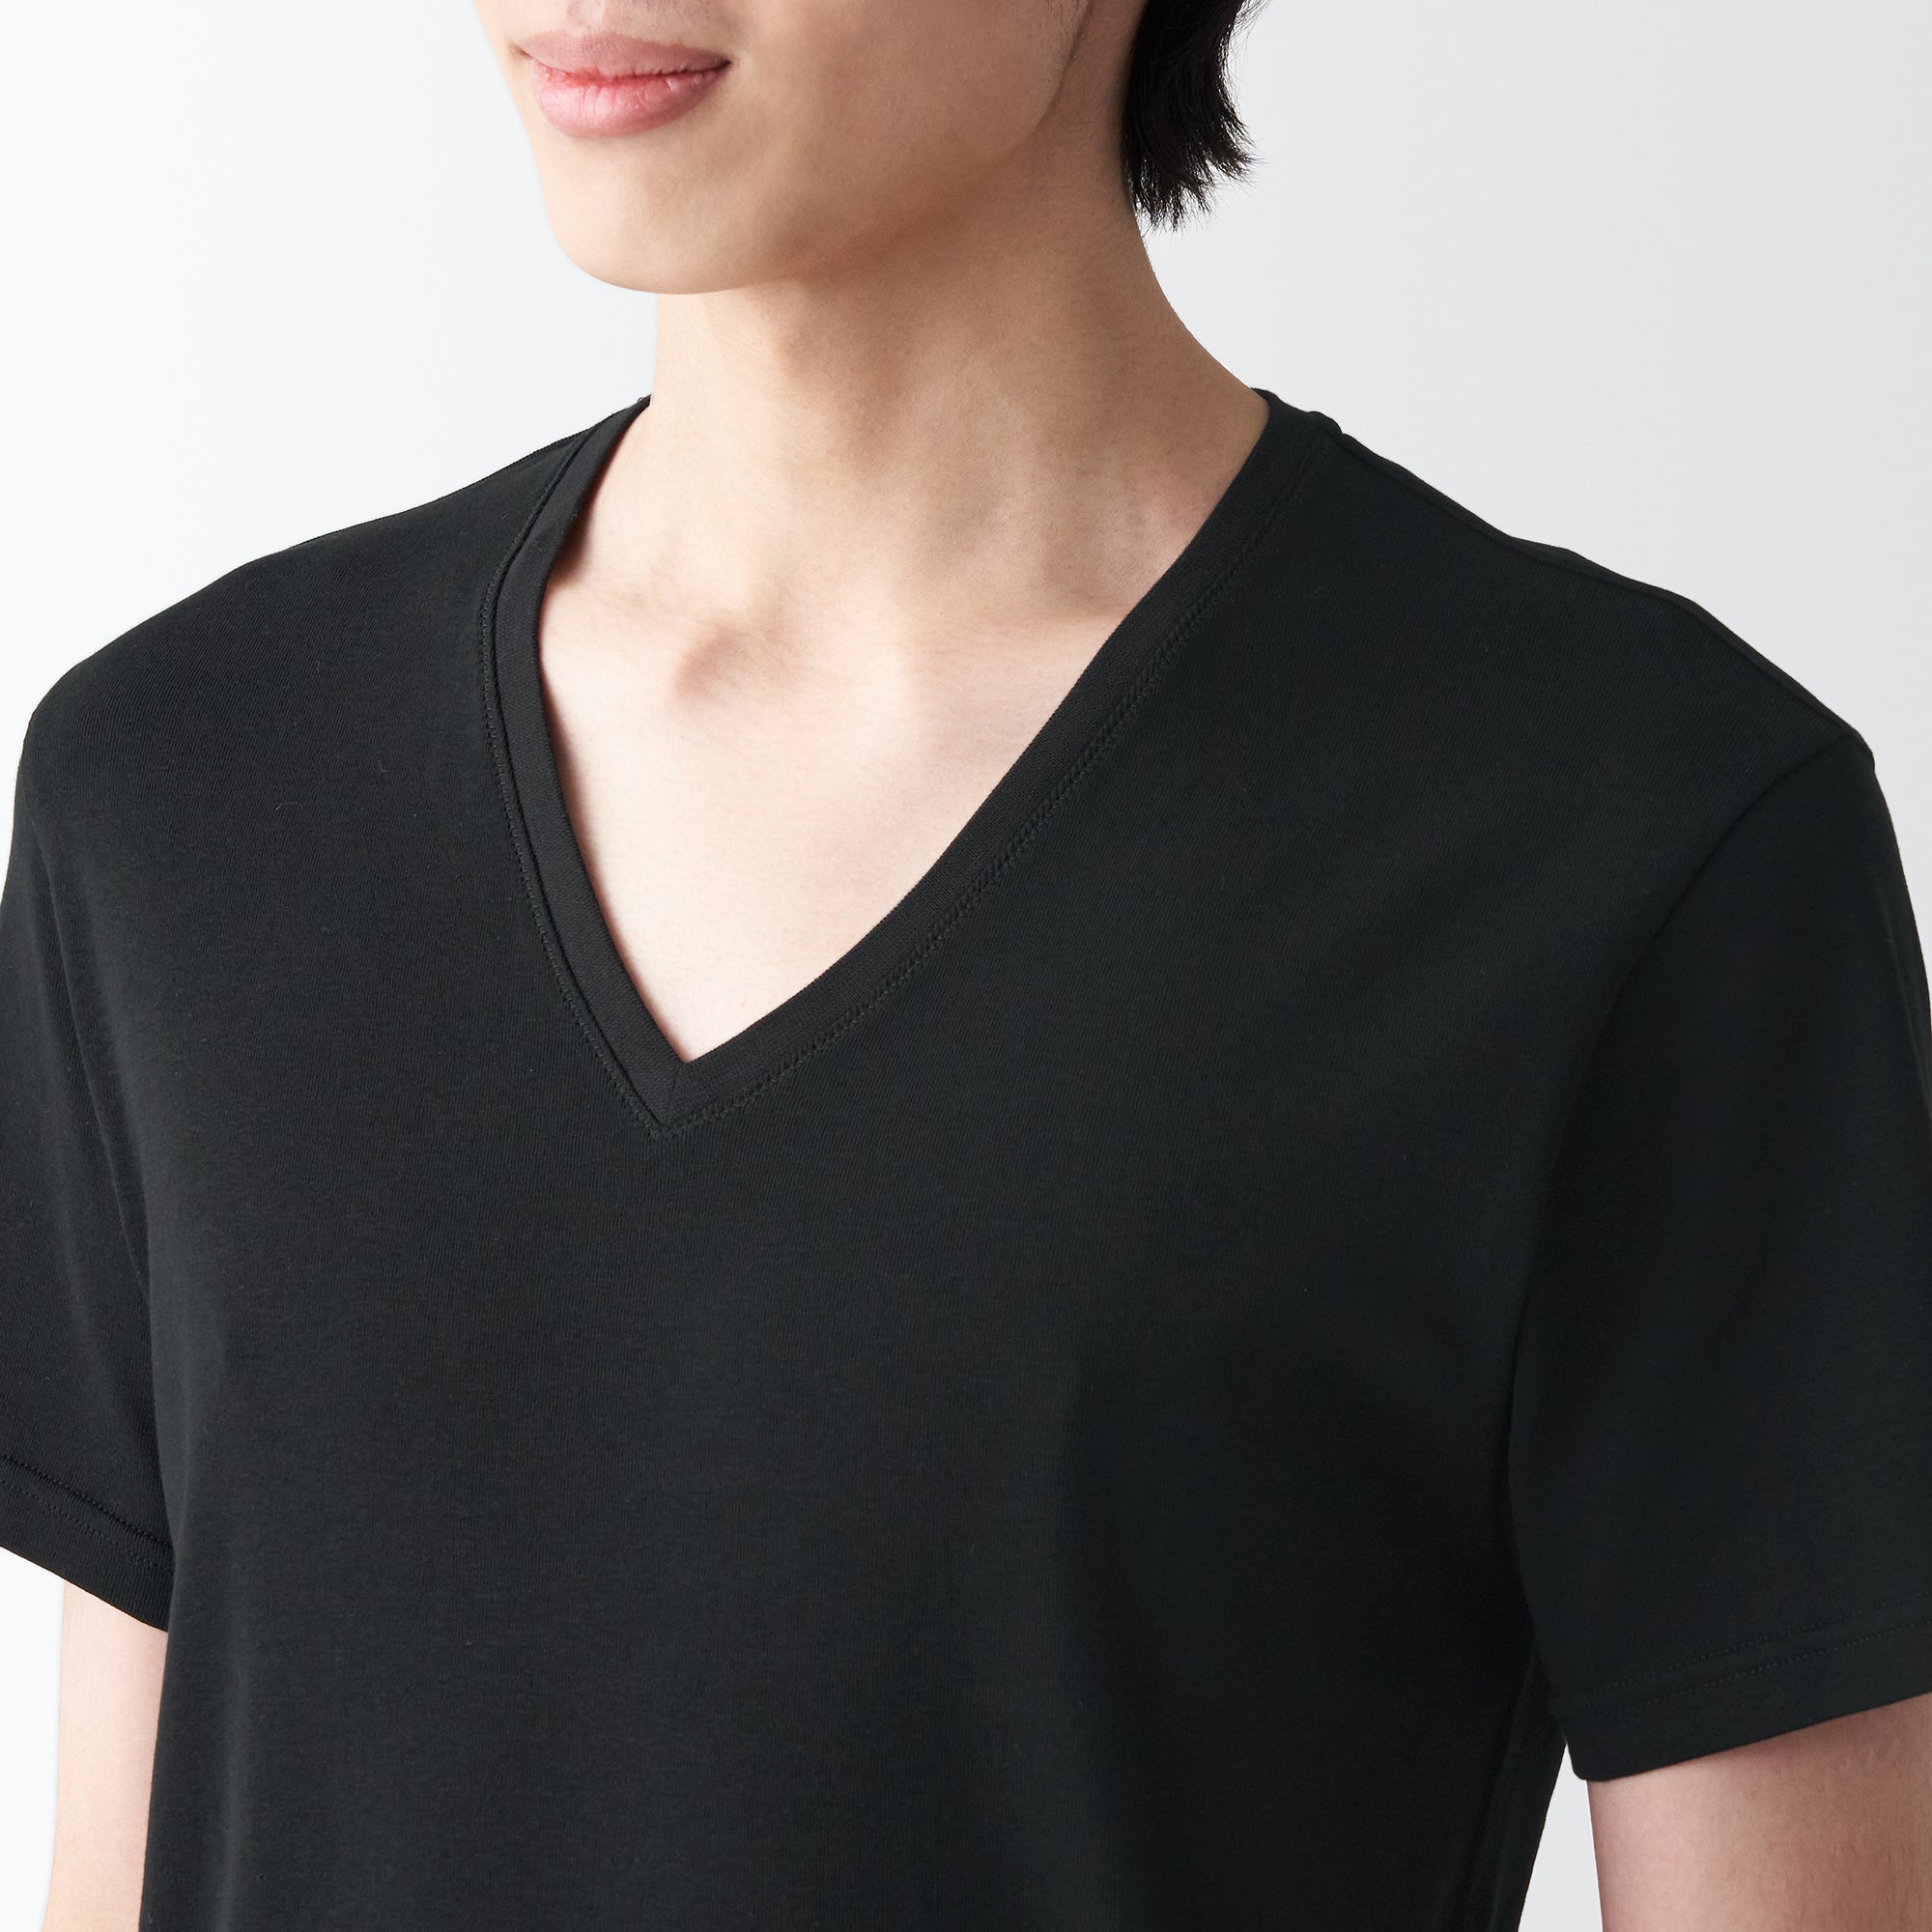 Men's Breathable Cotton V-Neck Short Sleeve T-Shirt